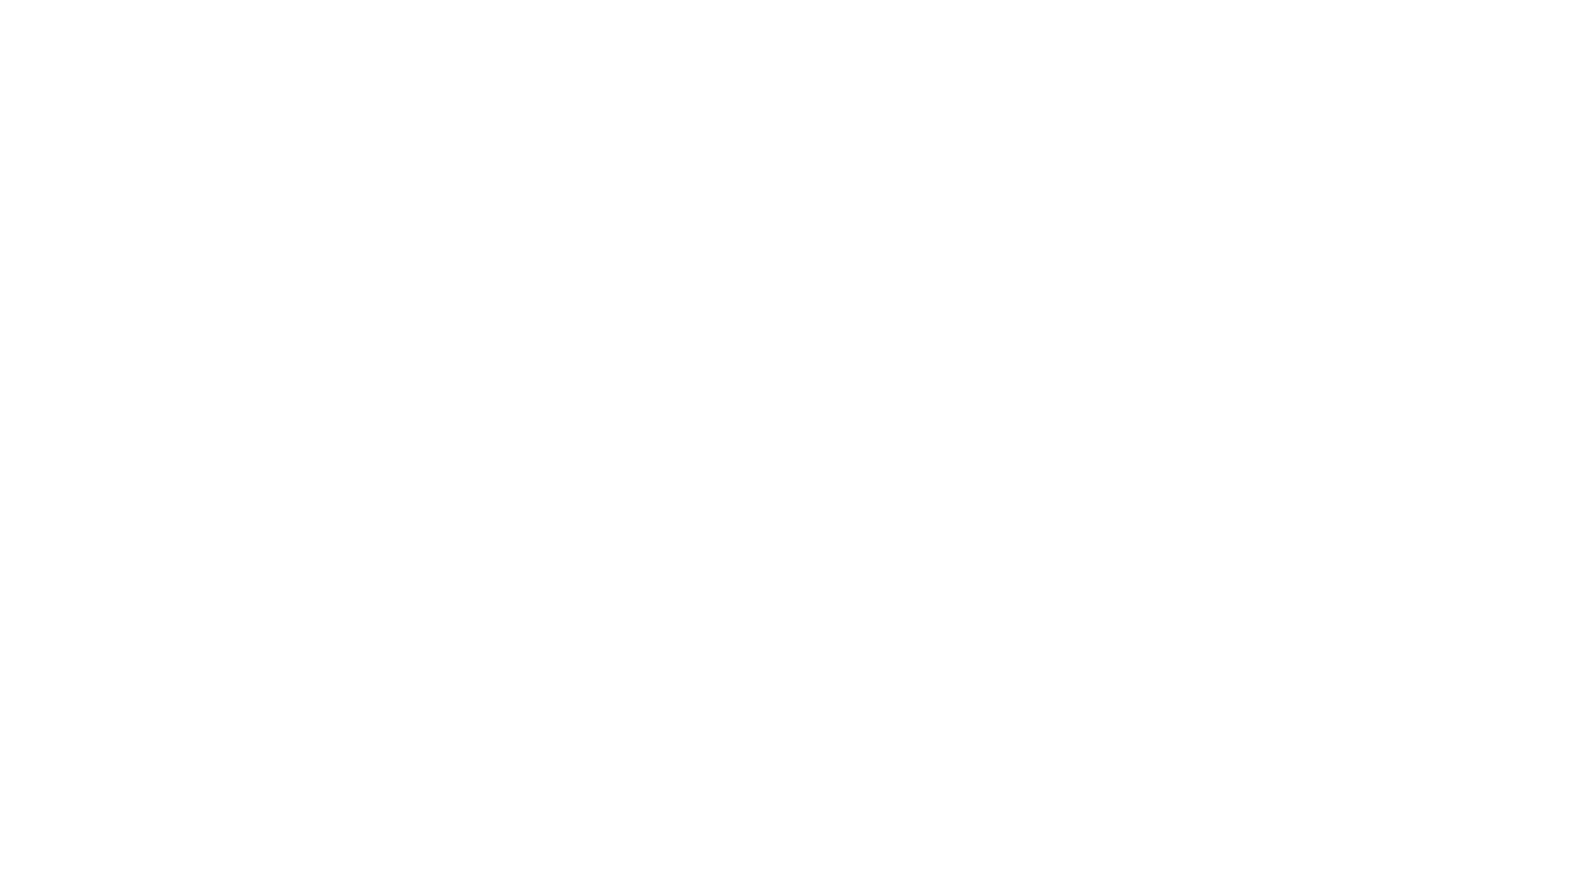 Smurfit Kappa Group logo for dark backgrounds (transparent PNG)